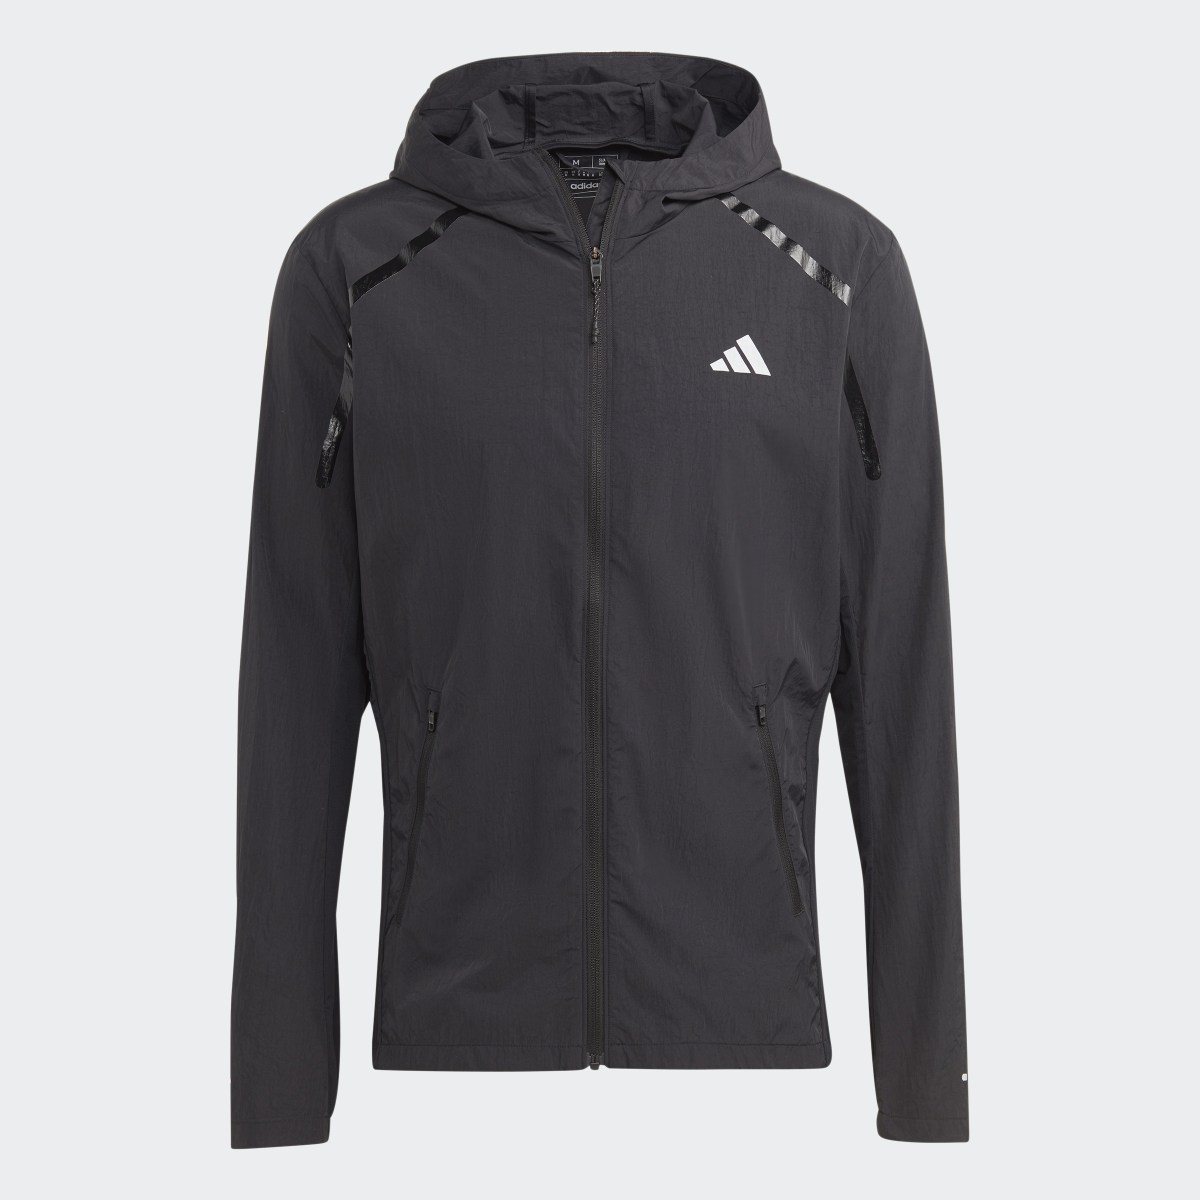 Adidas Marathon Warm-Up Running Jacket. 5